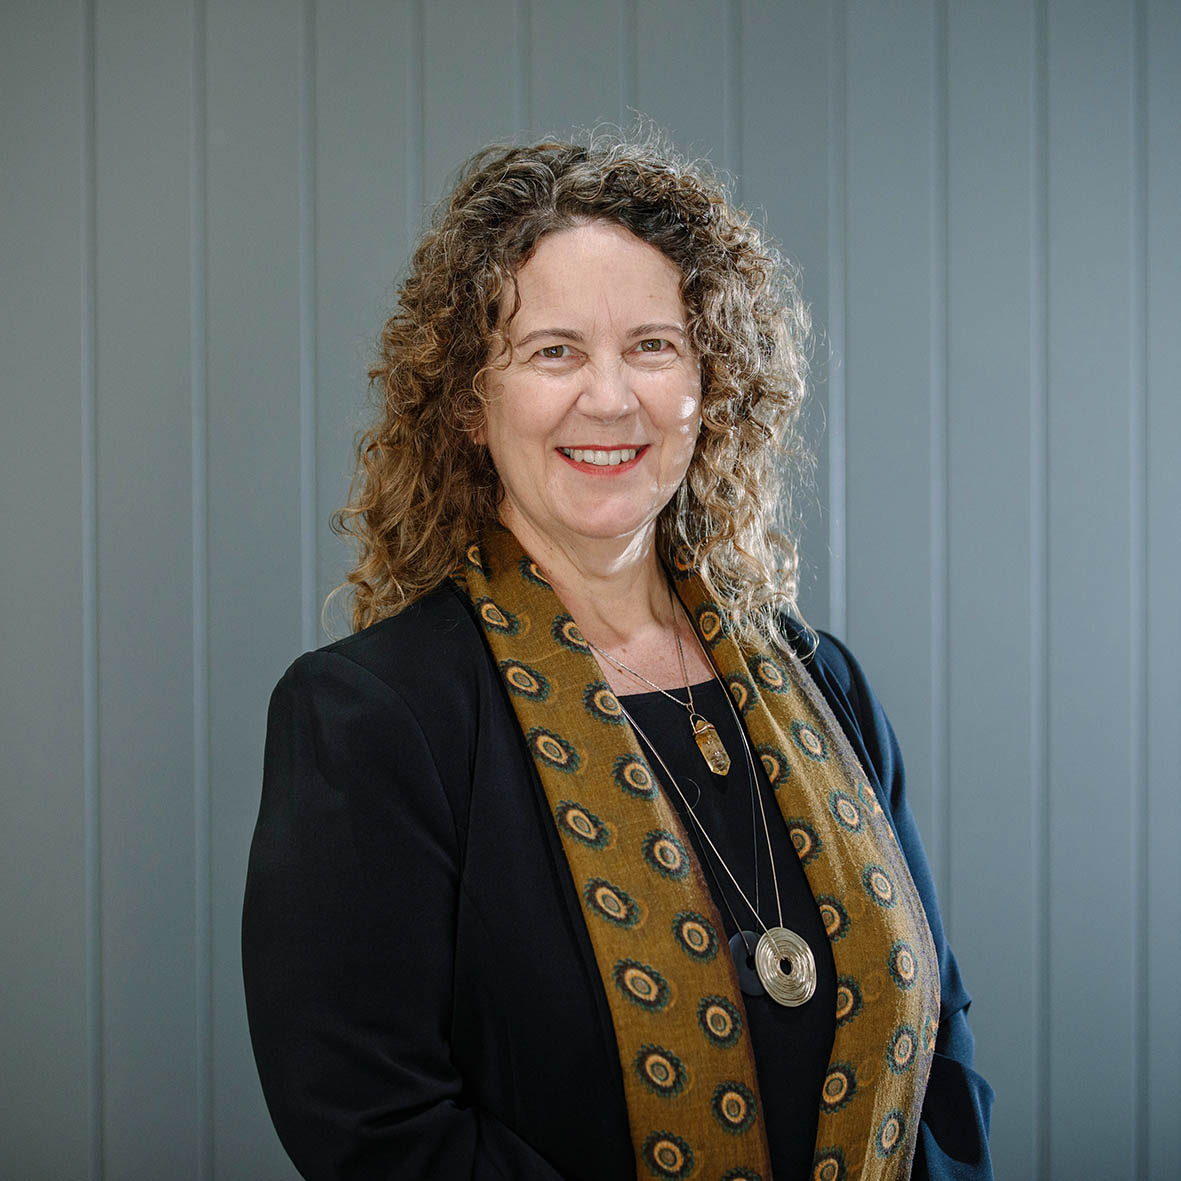 Professor Gail Robinson